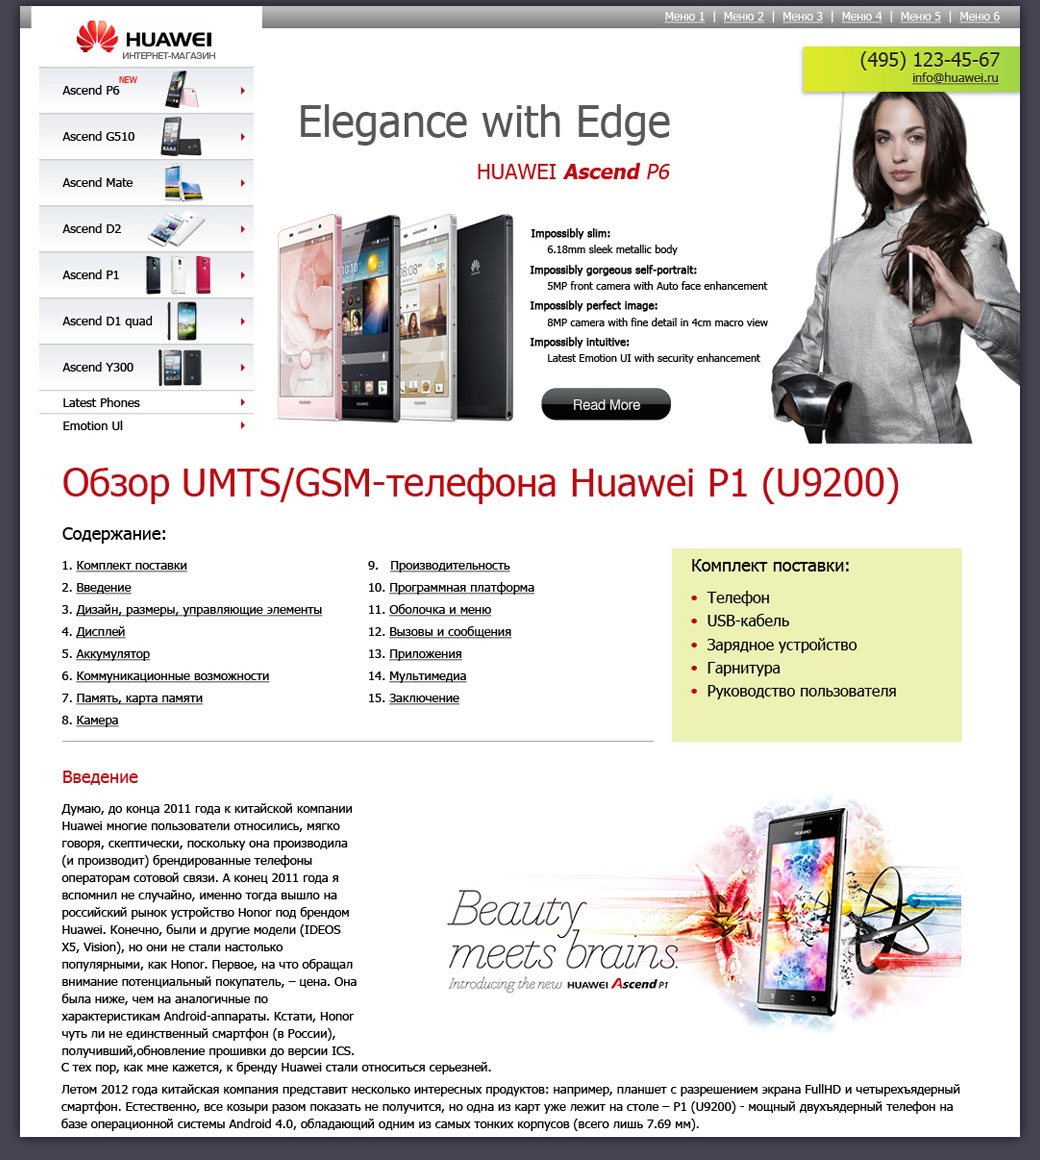 Дизайн интернет-магазина телефонов Huawei